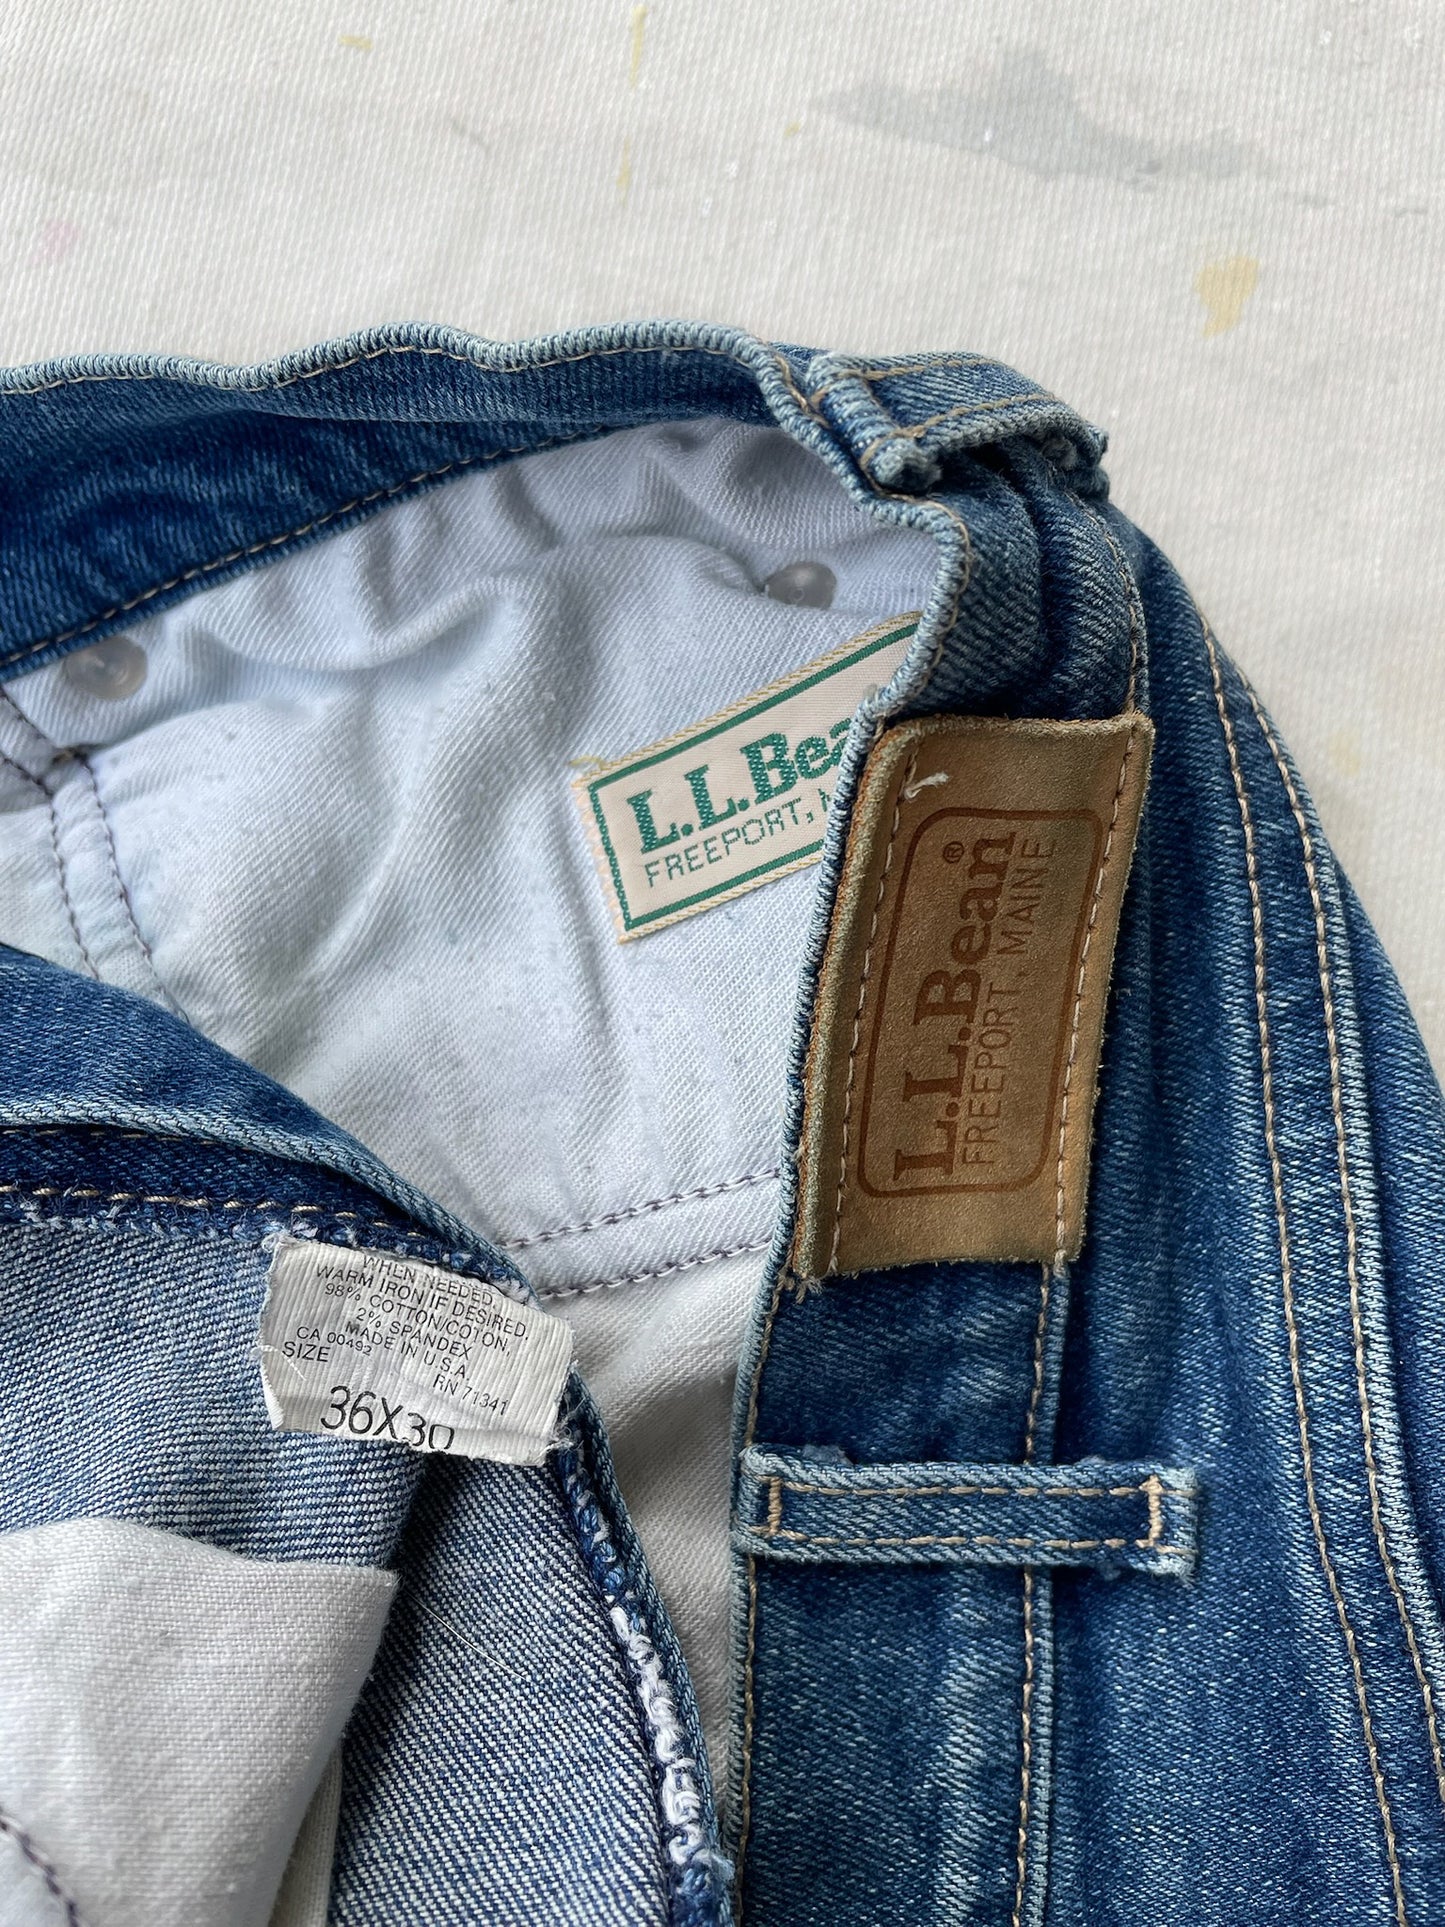 80's L.L.Bean Jeans—[33x28]